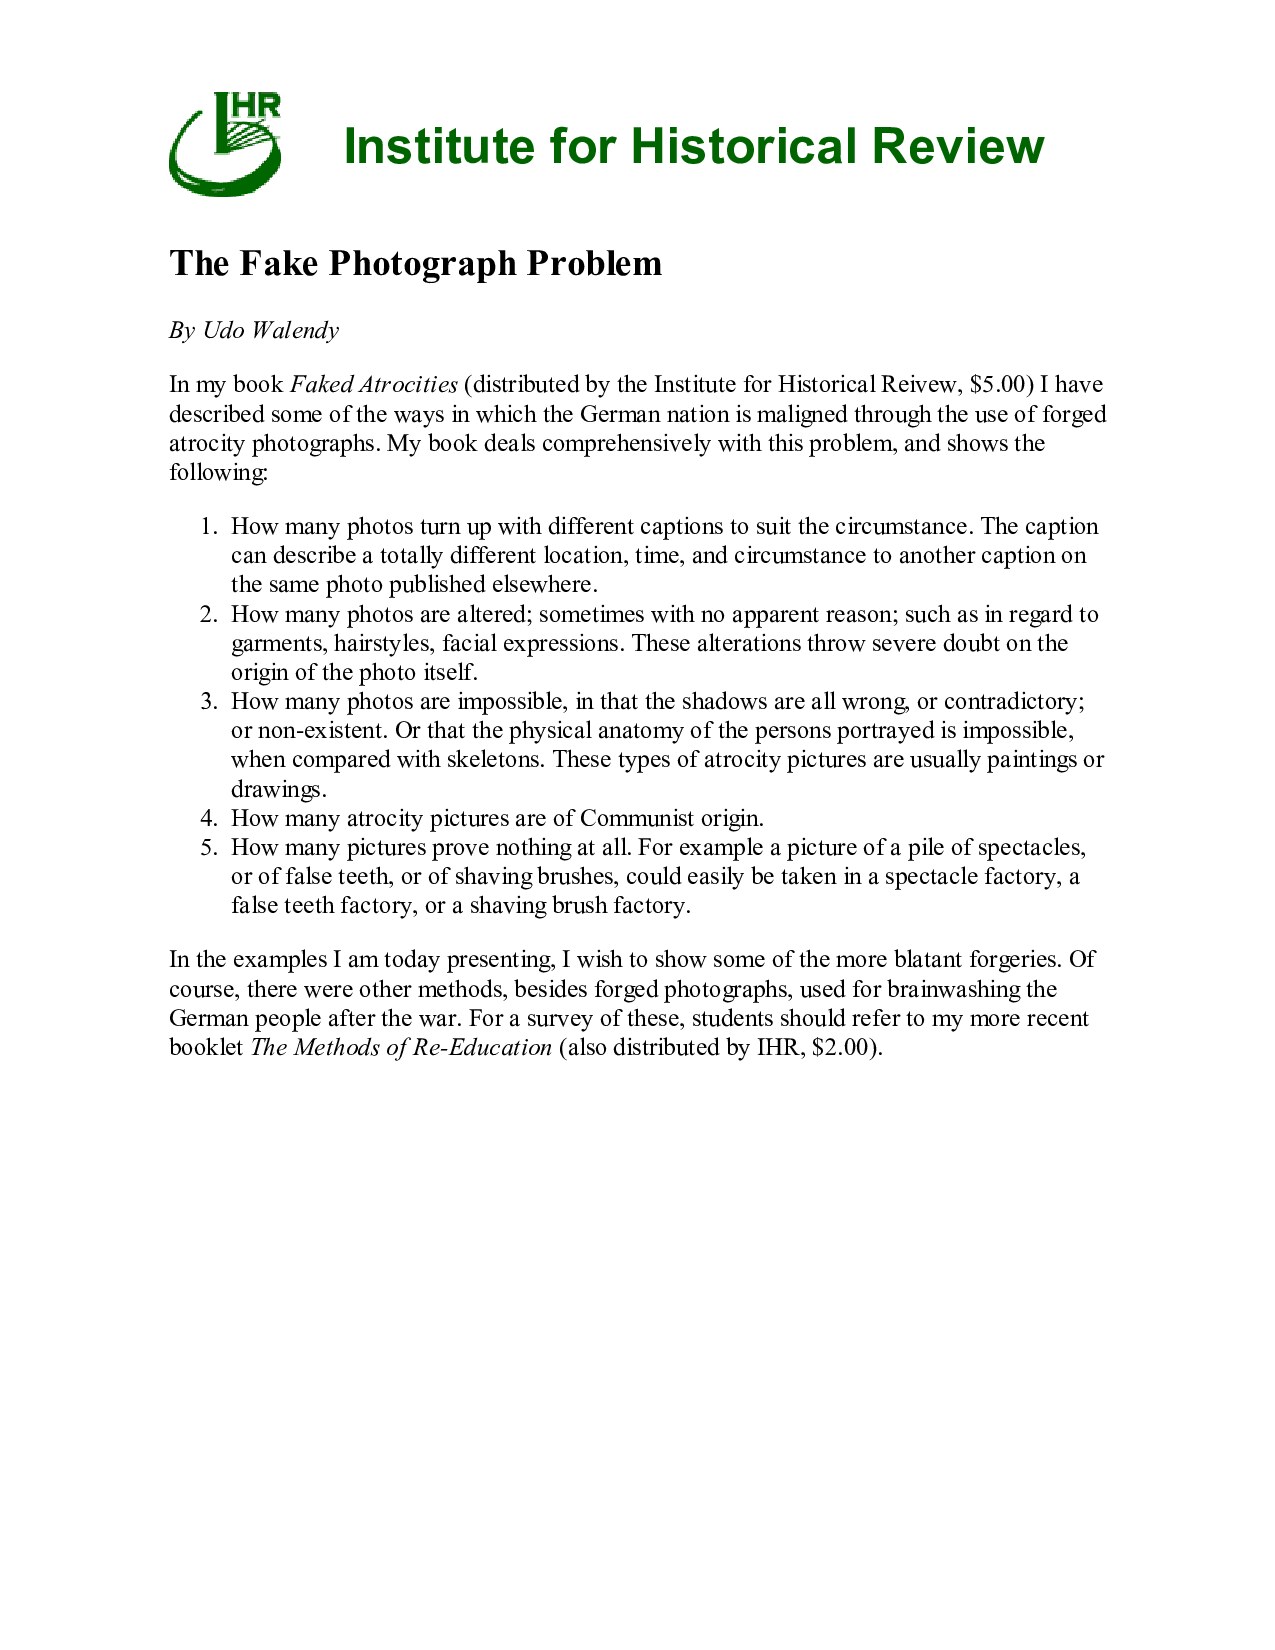 The Fake Photograph Problem